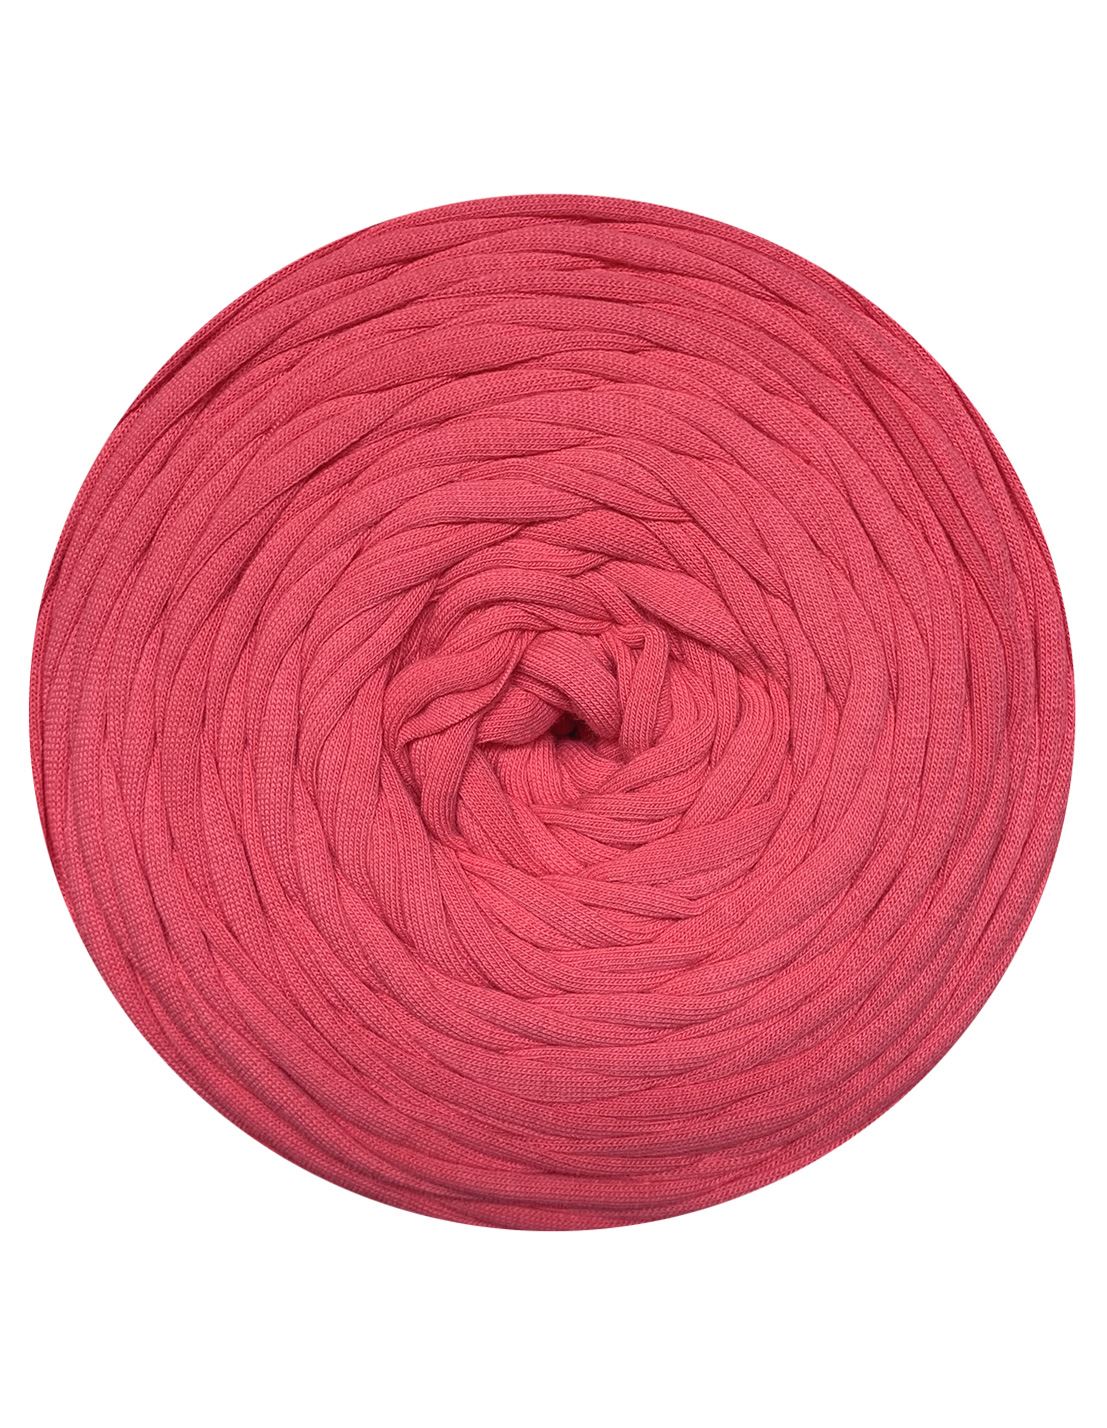 Pale punch pink t-shirt yarn (100-120m)